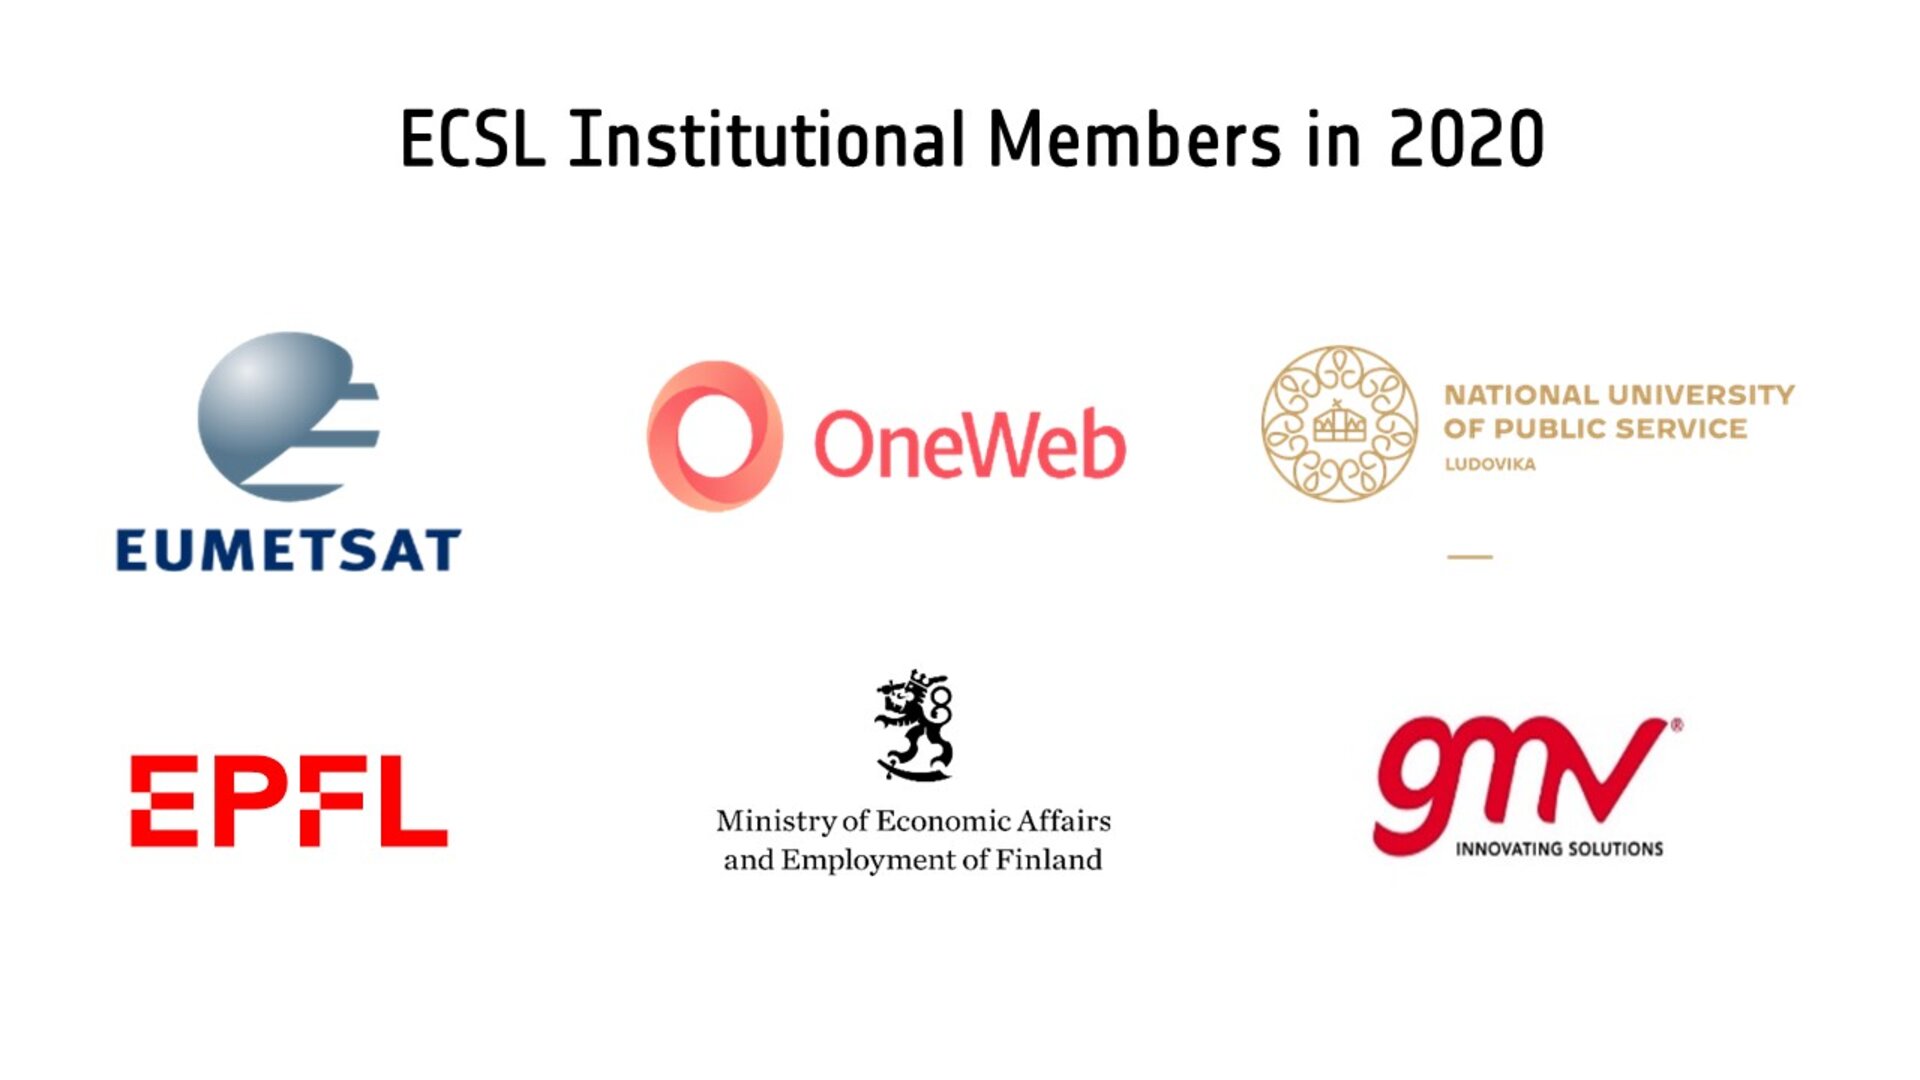 List of 2020 ECSL Institutional Members